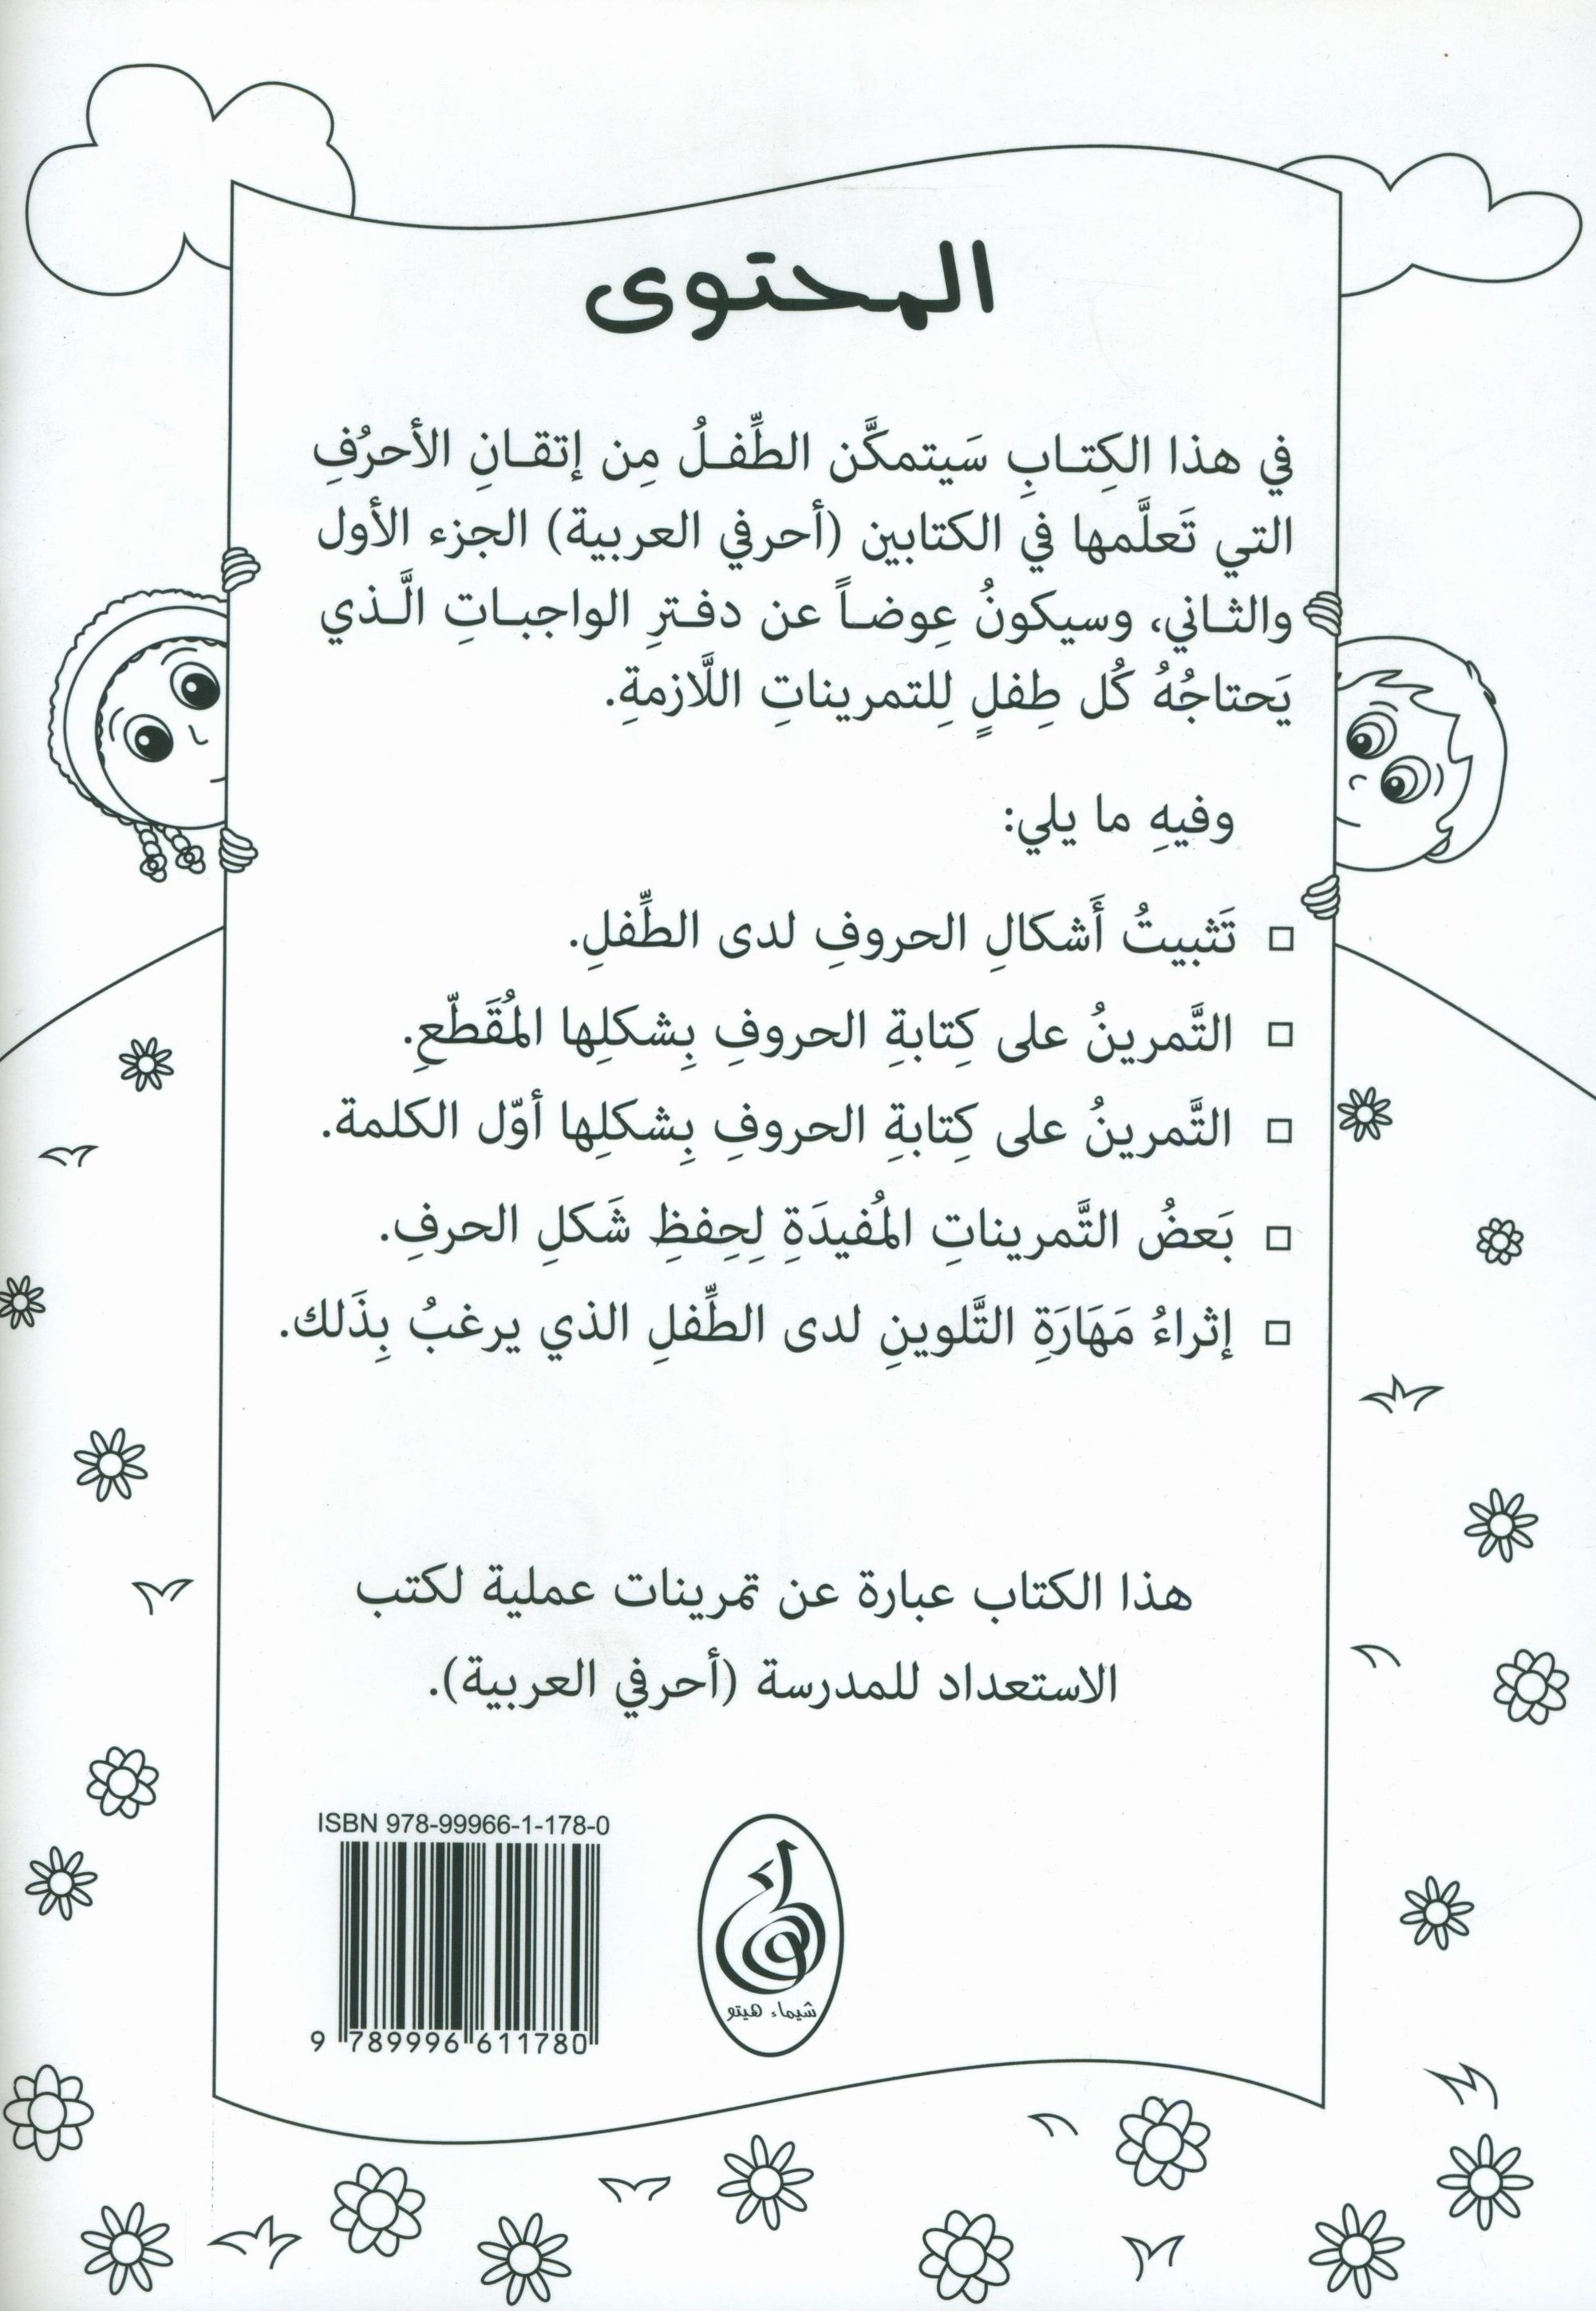 Preparing for School - My Arabic Letters Workbook  الاستعداد للمدرسة - أحرفي العربية كتاب التمرينات